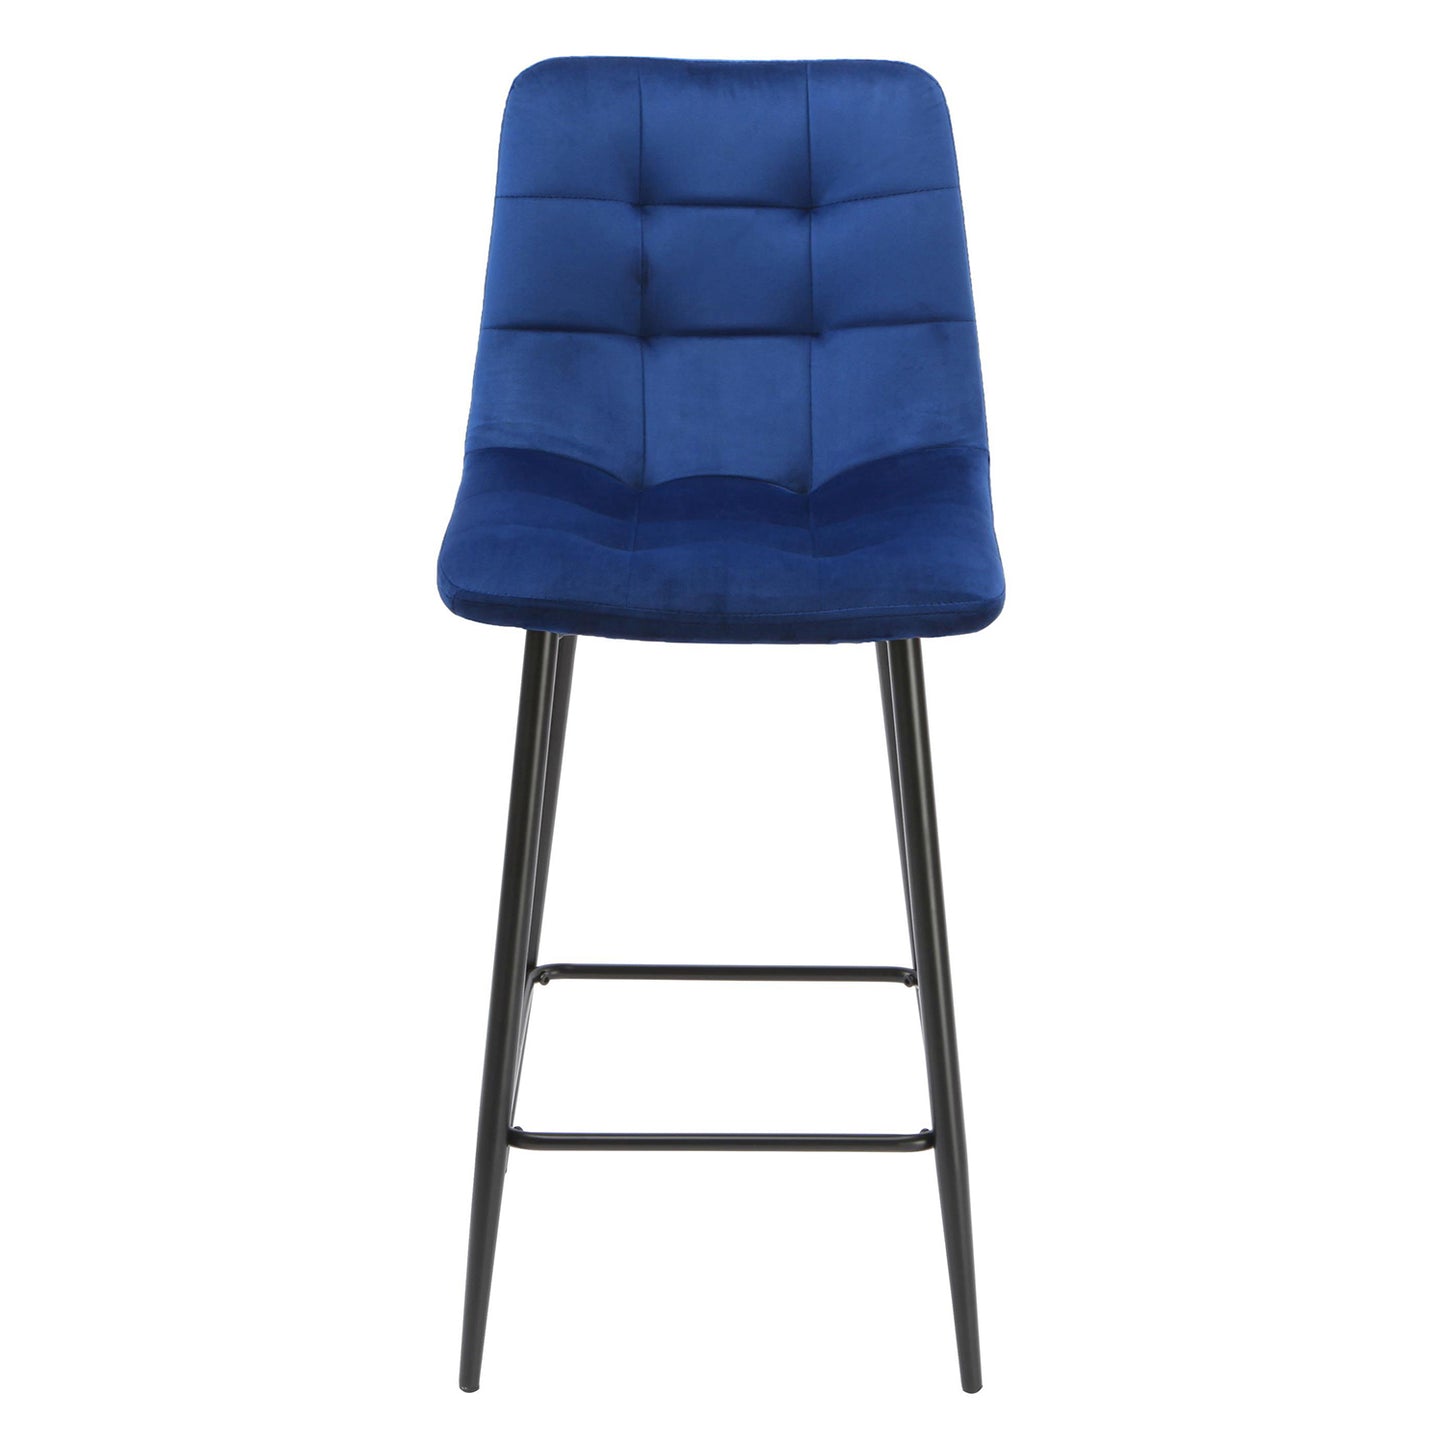 2 Set squared navy blue kitchen bar stool by Native